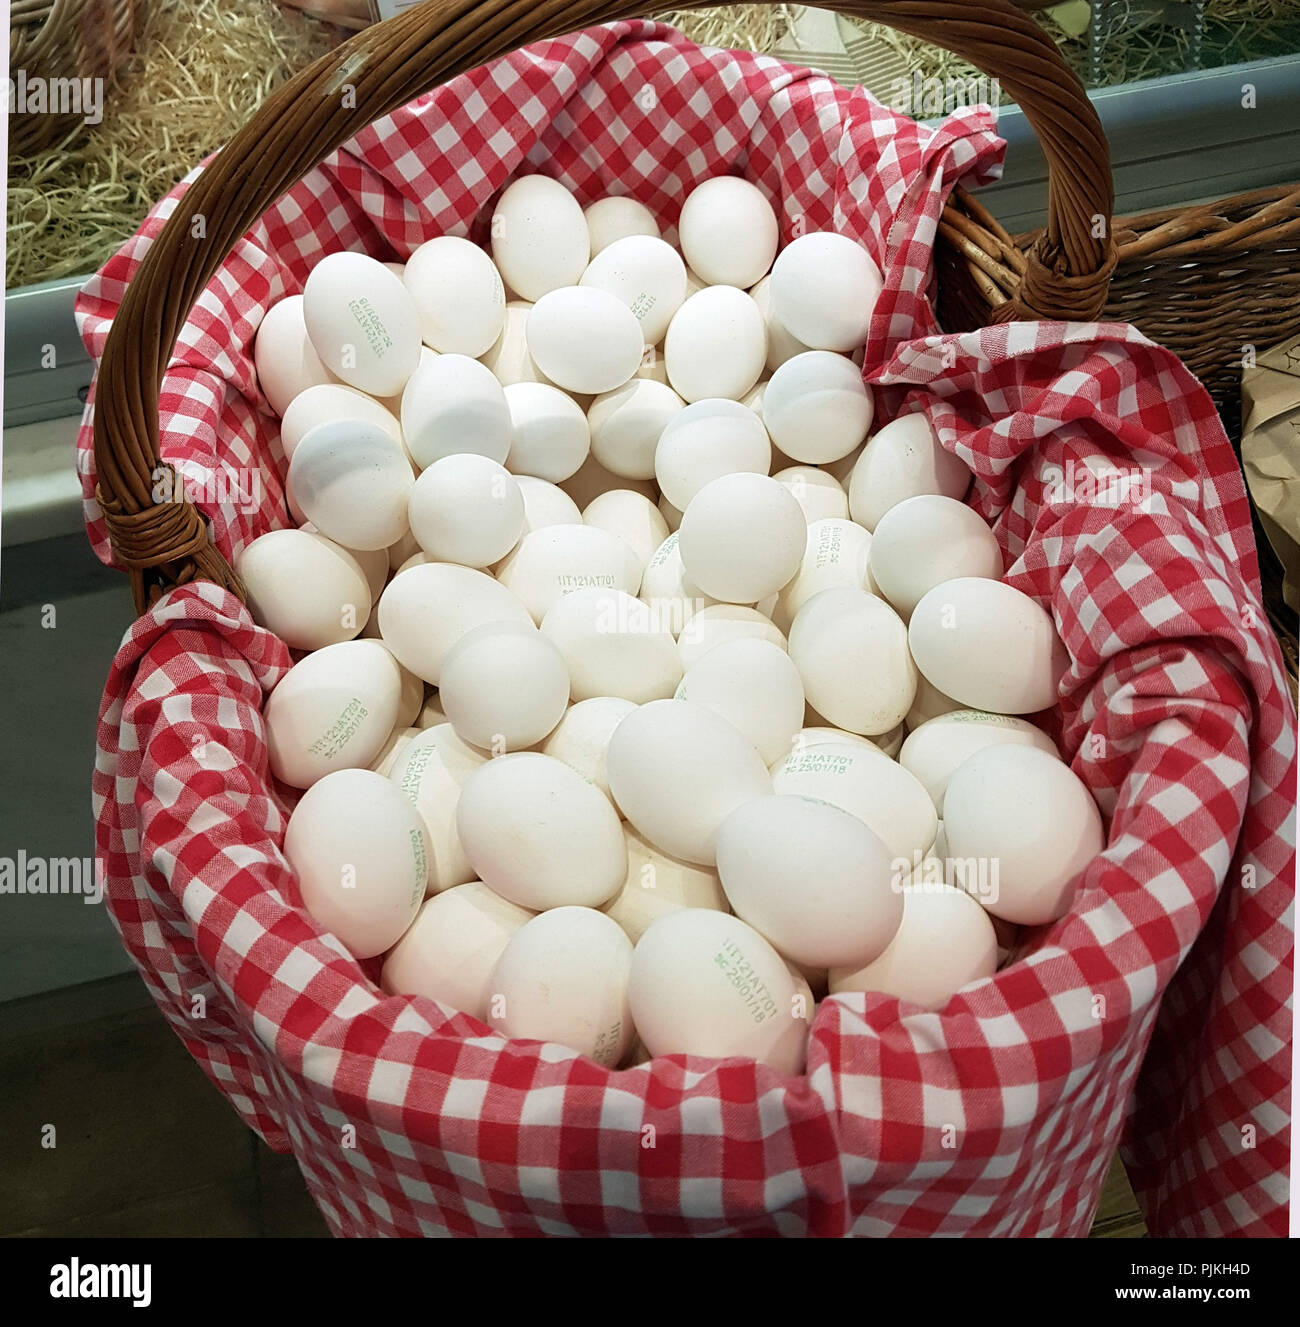 Eier aus Freilandhaltung im Korb Stockfoto